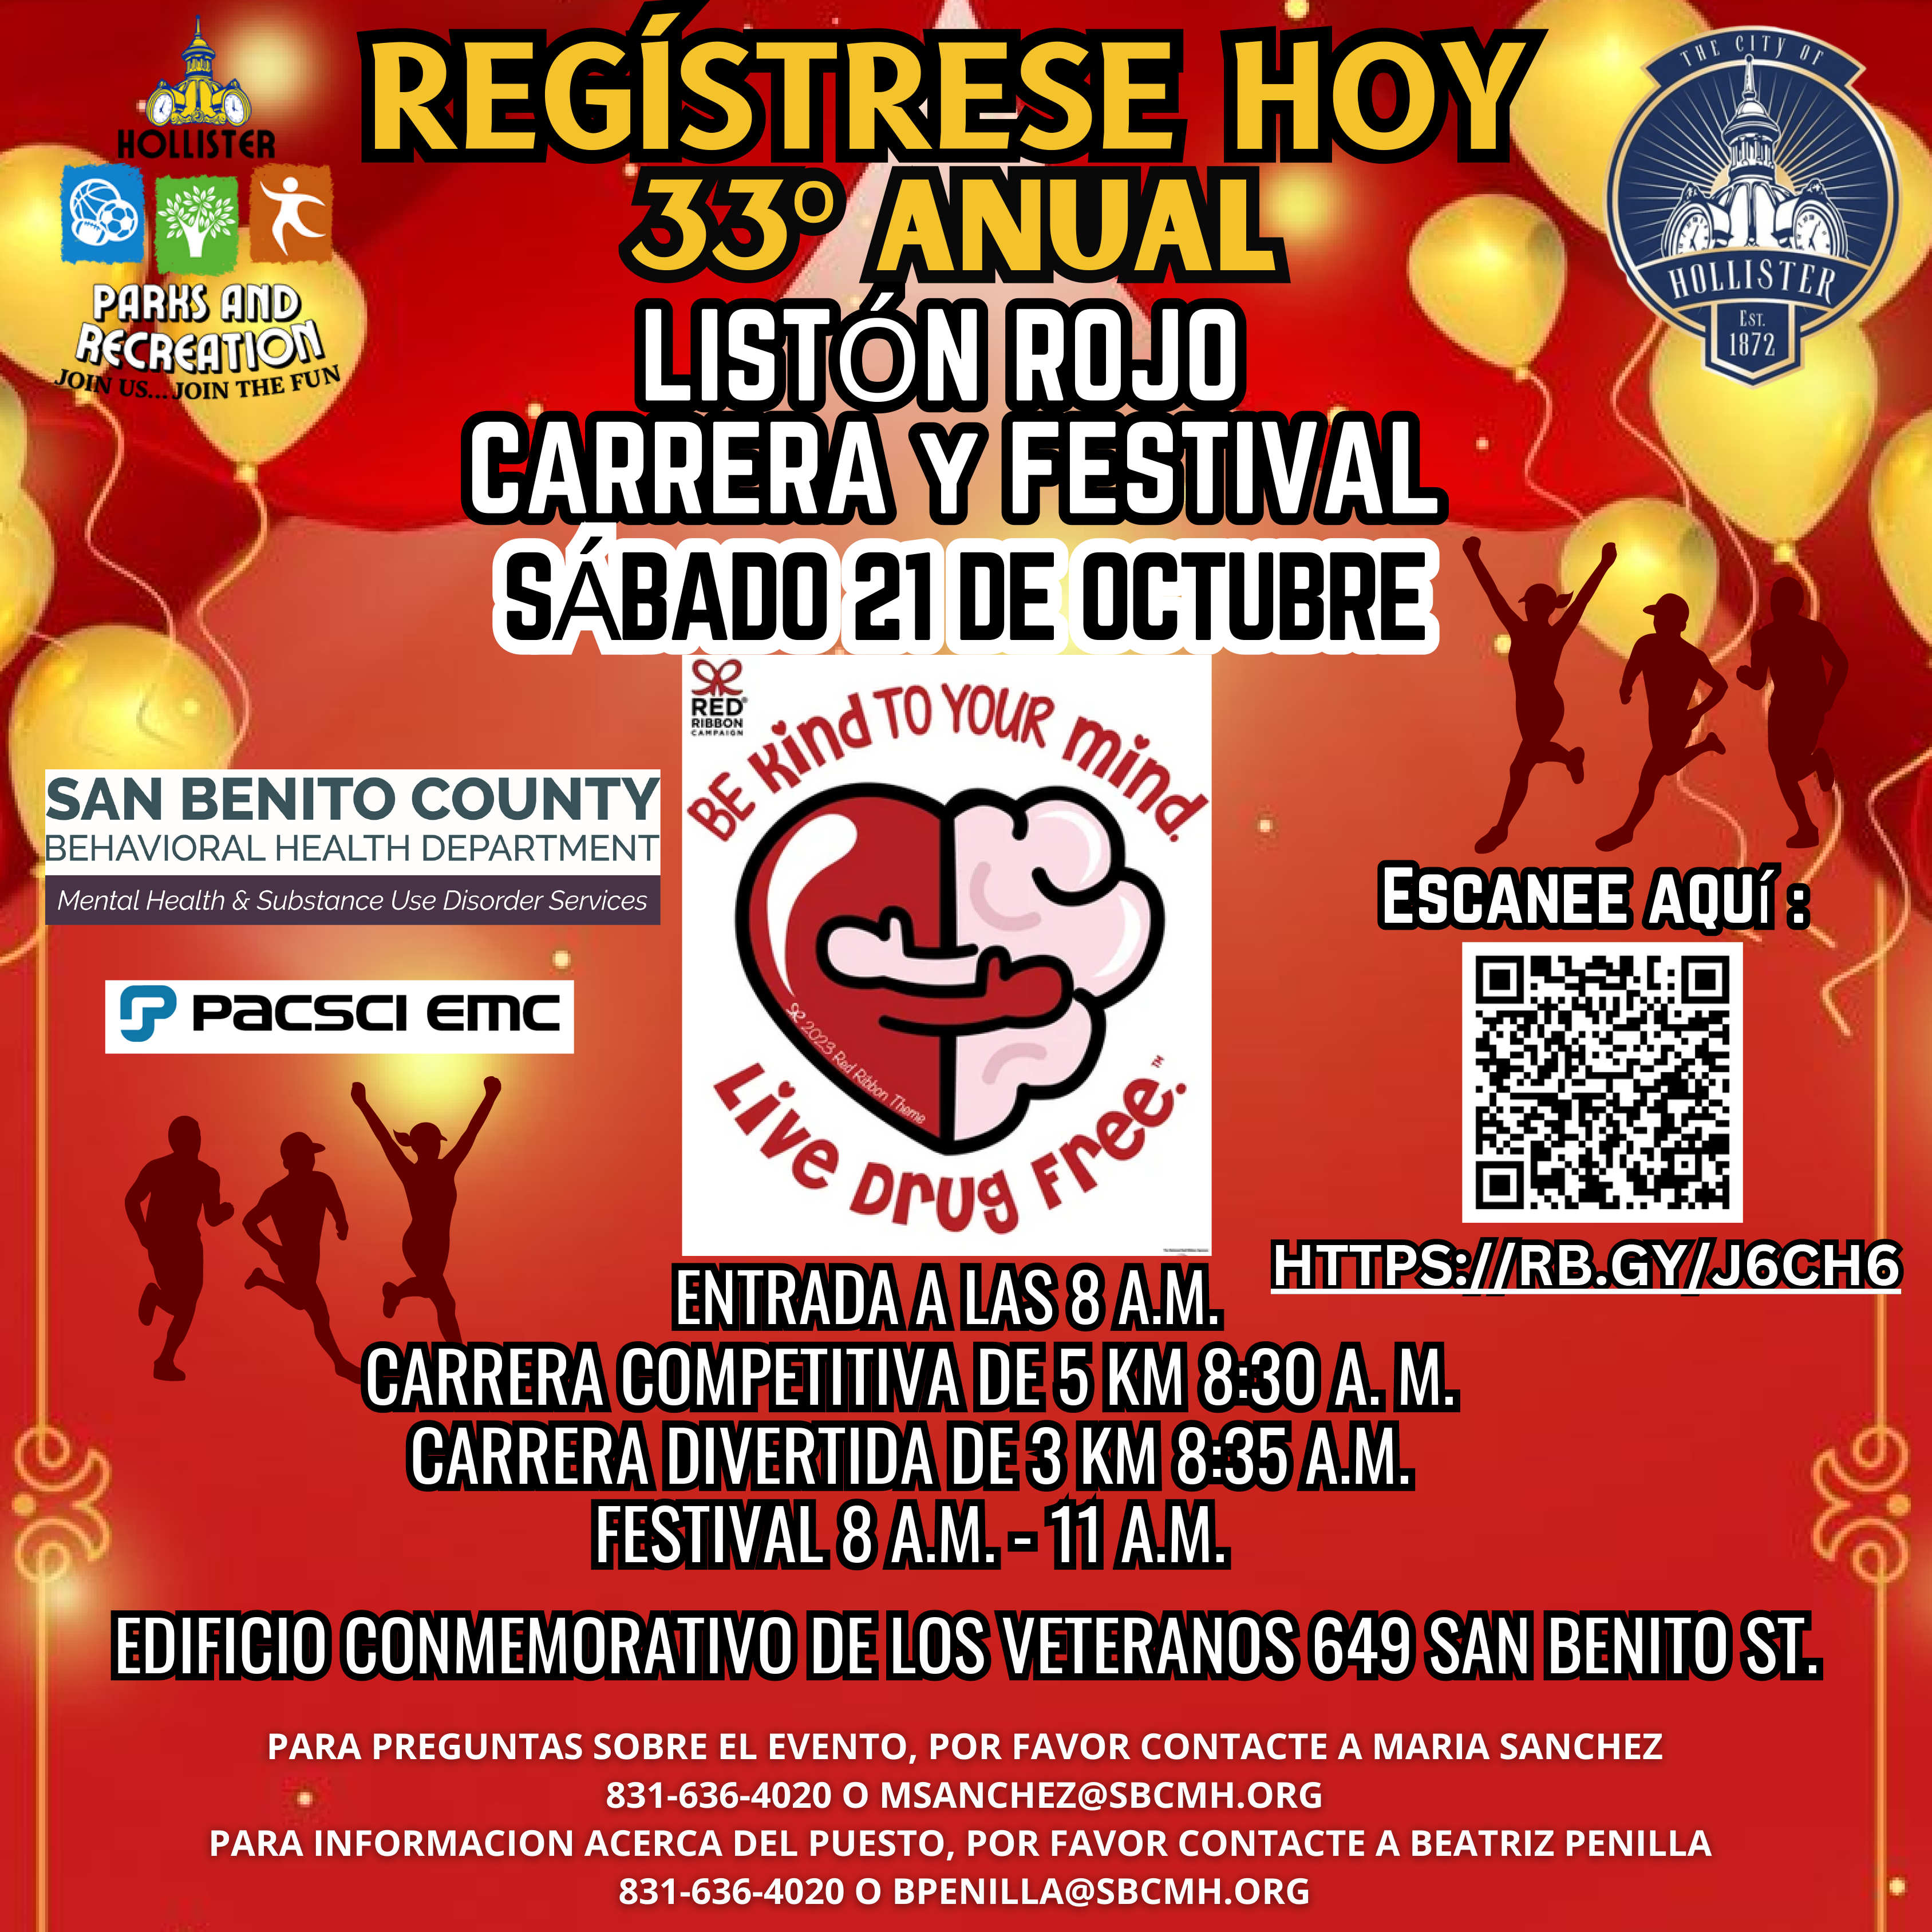 List on Rojo Carrera Y Festival